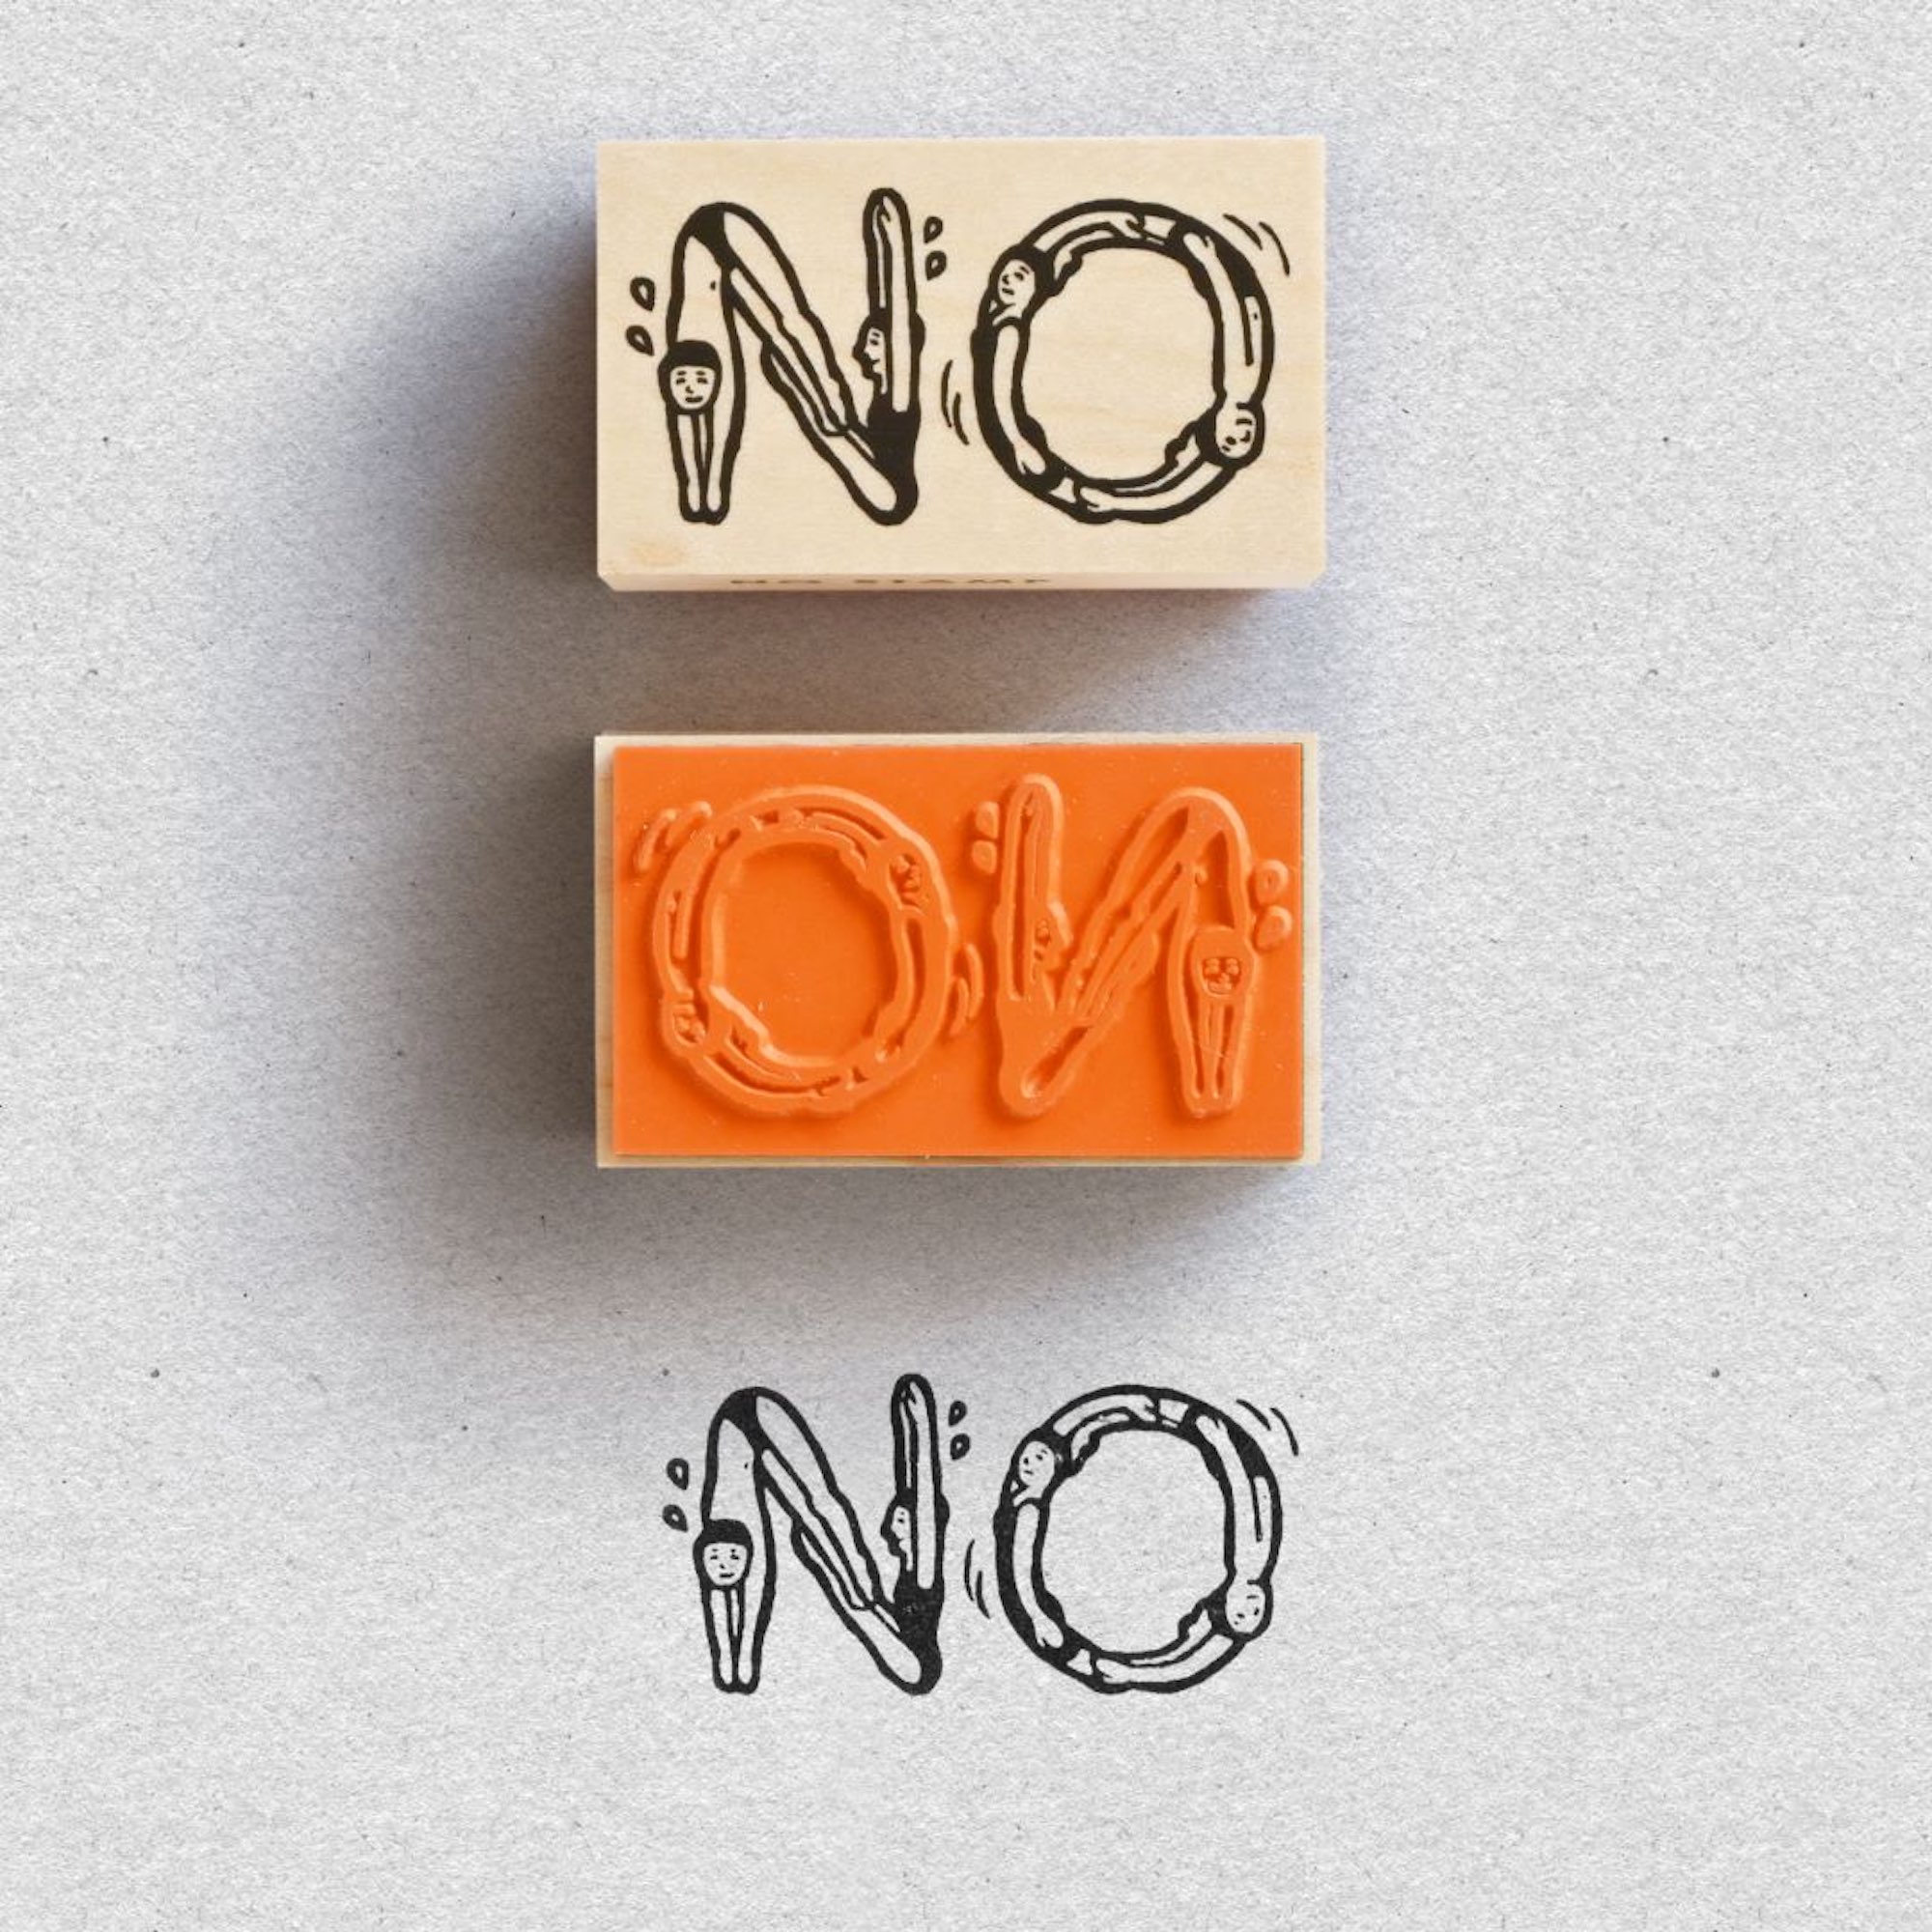 "NO" - Alphabet - Japanischer Stempel